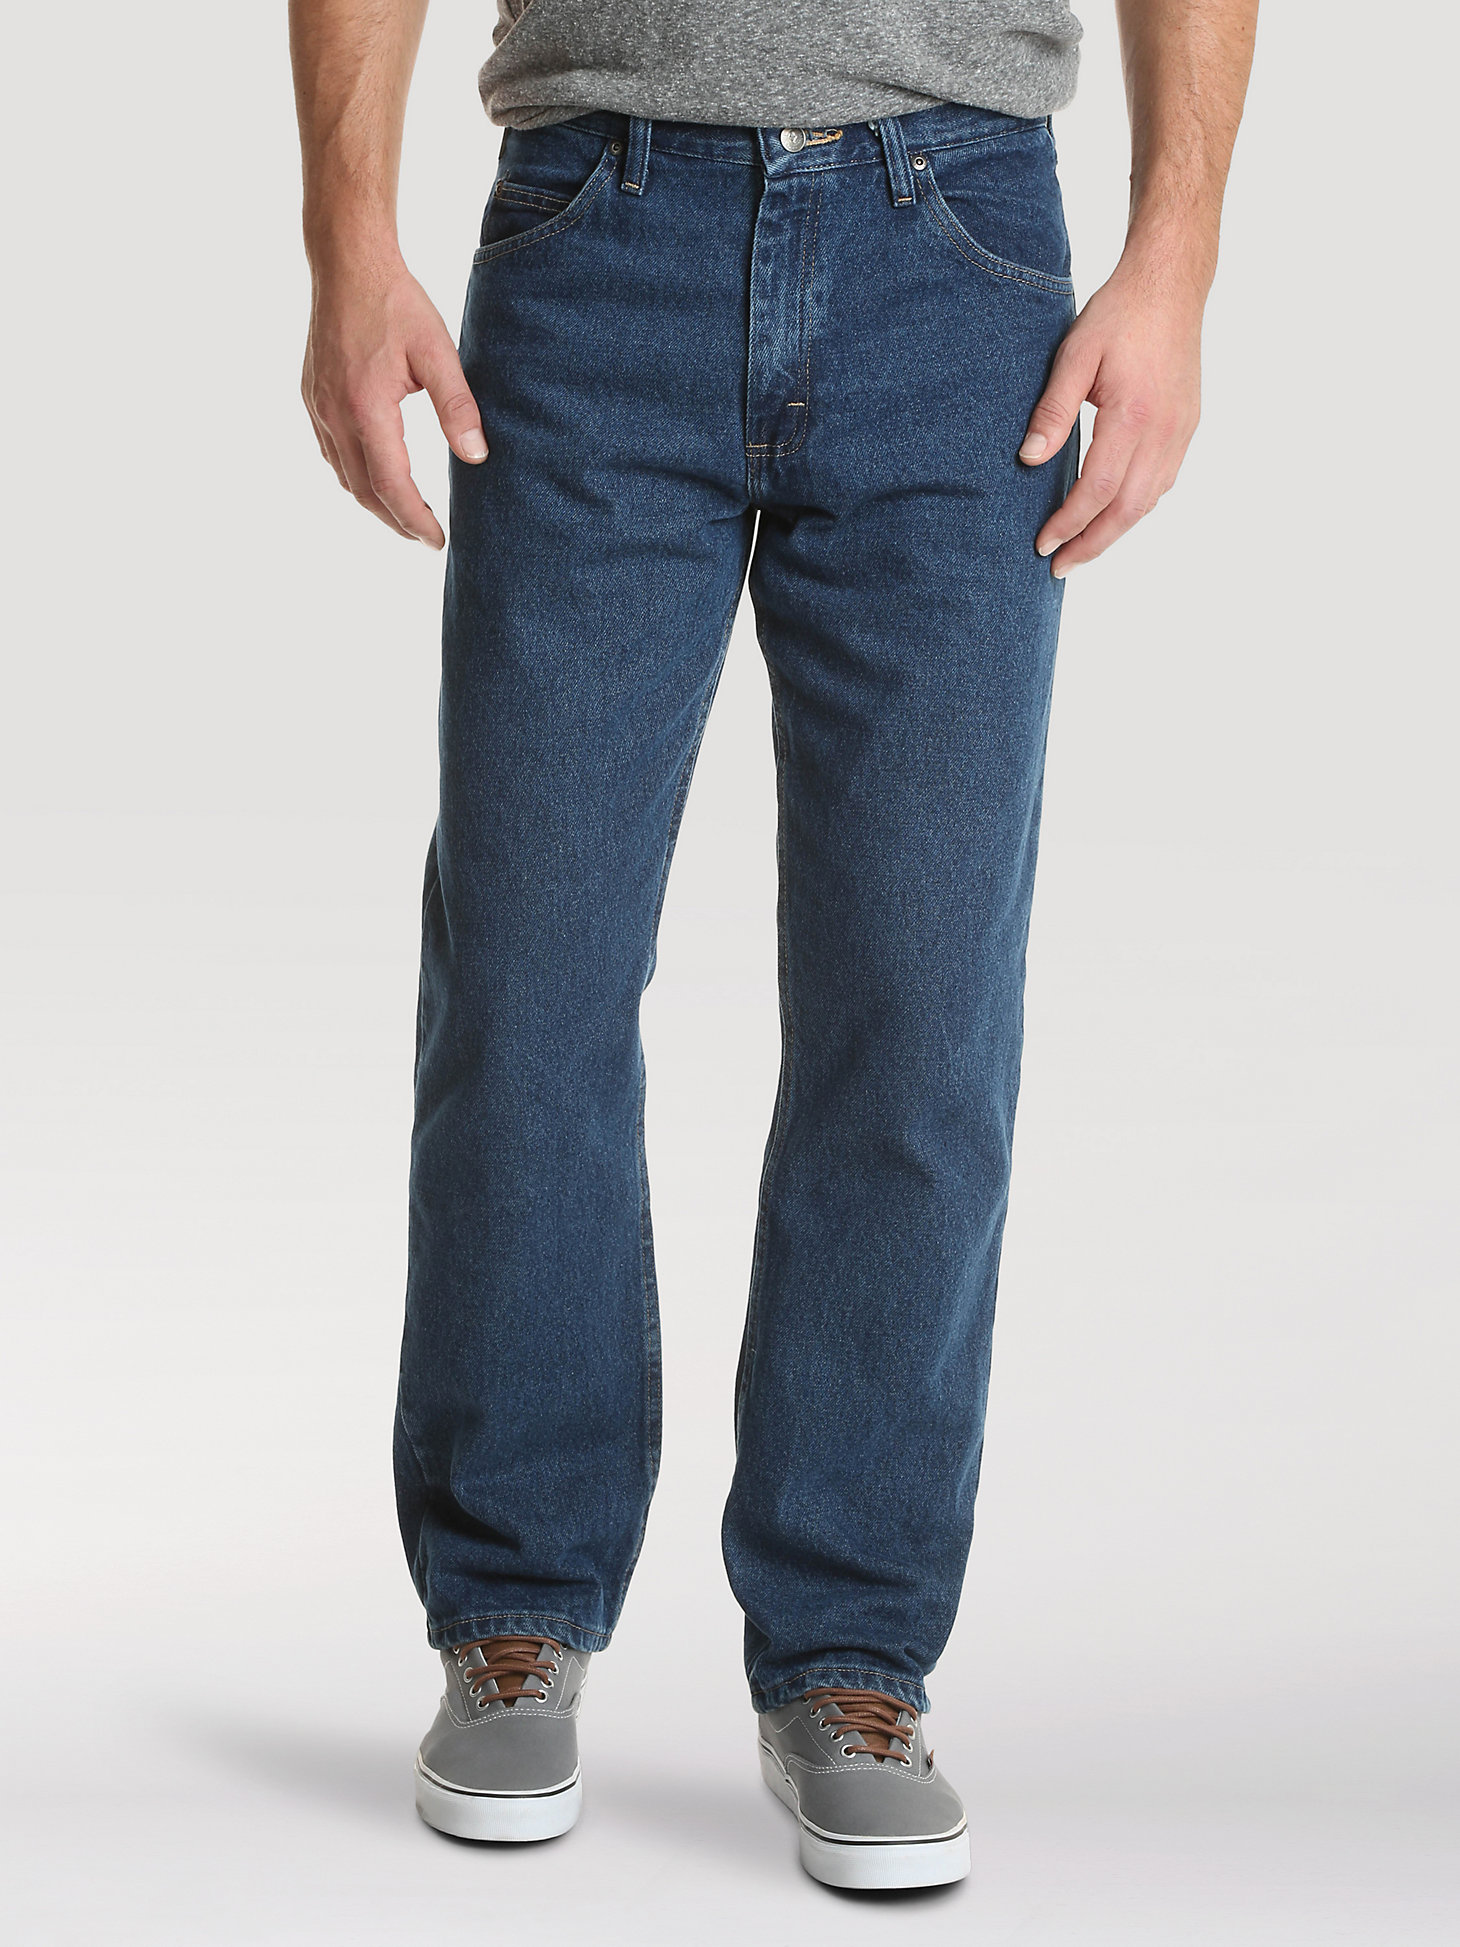 Men's Wrangler Authentics® Relaxed Fit Cotton Jean in Dark Stonewash main view